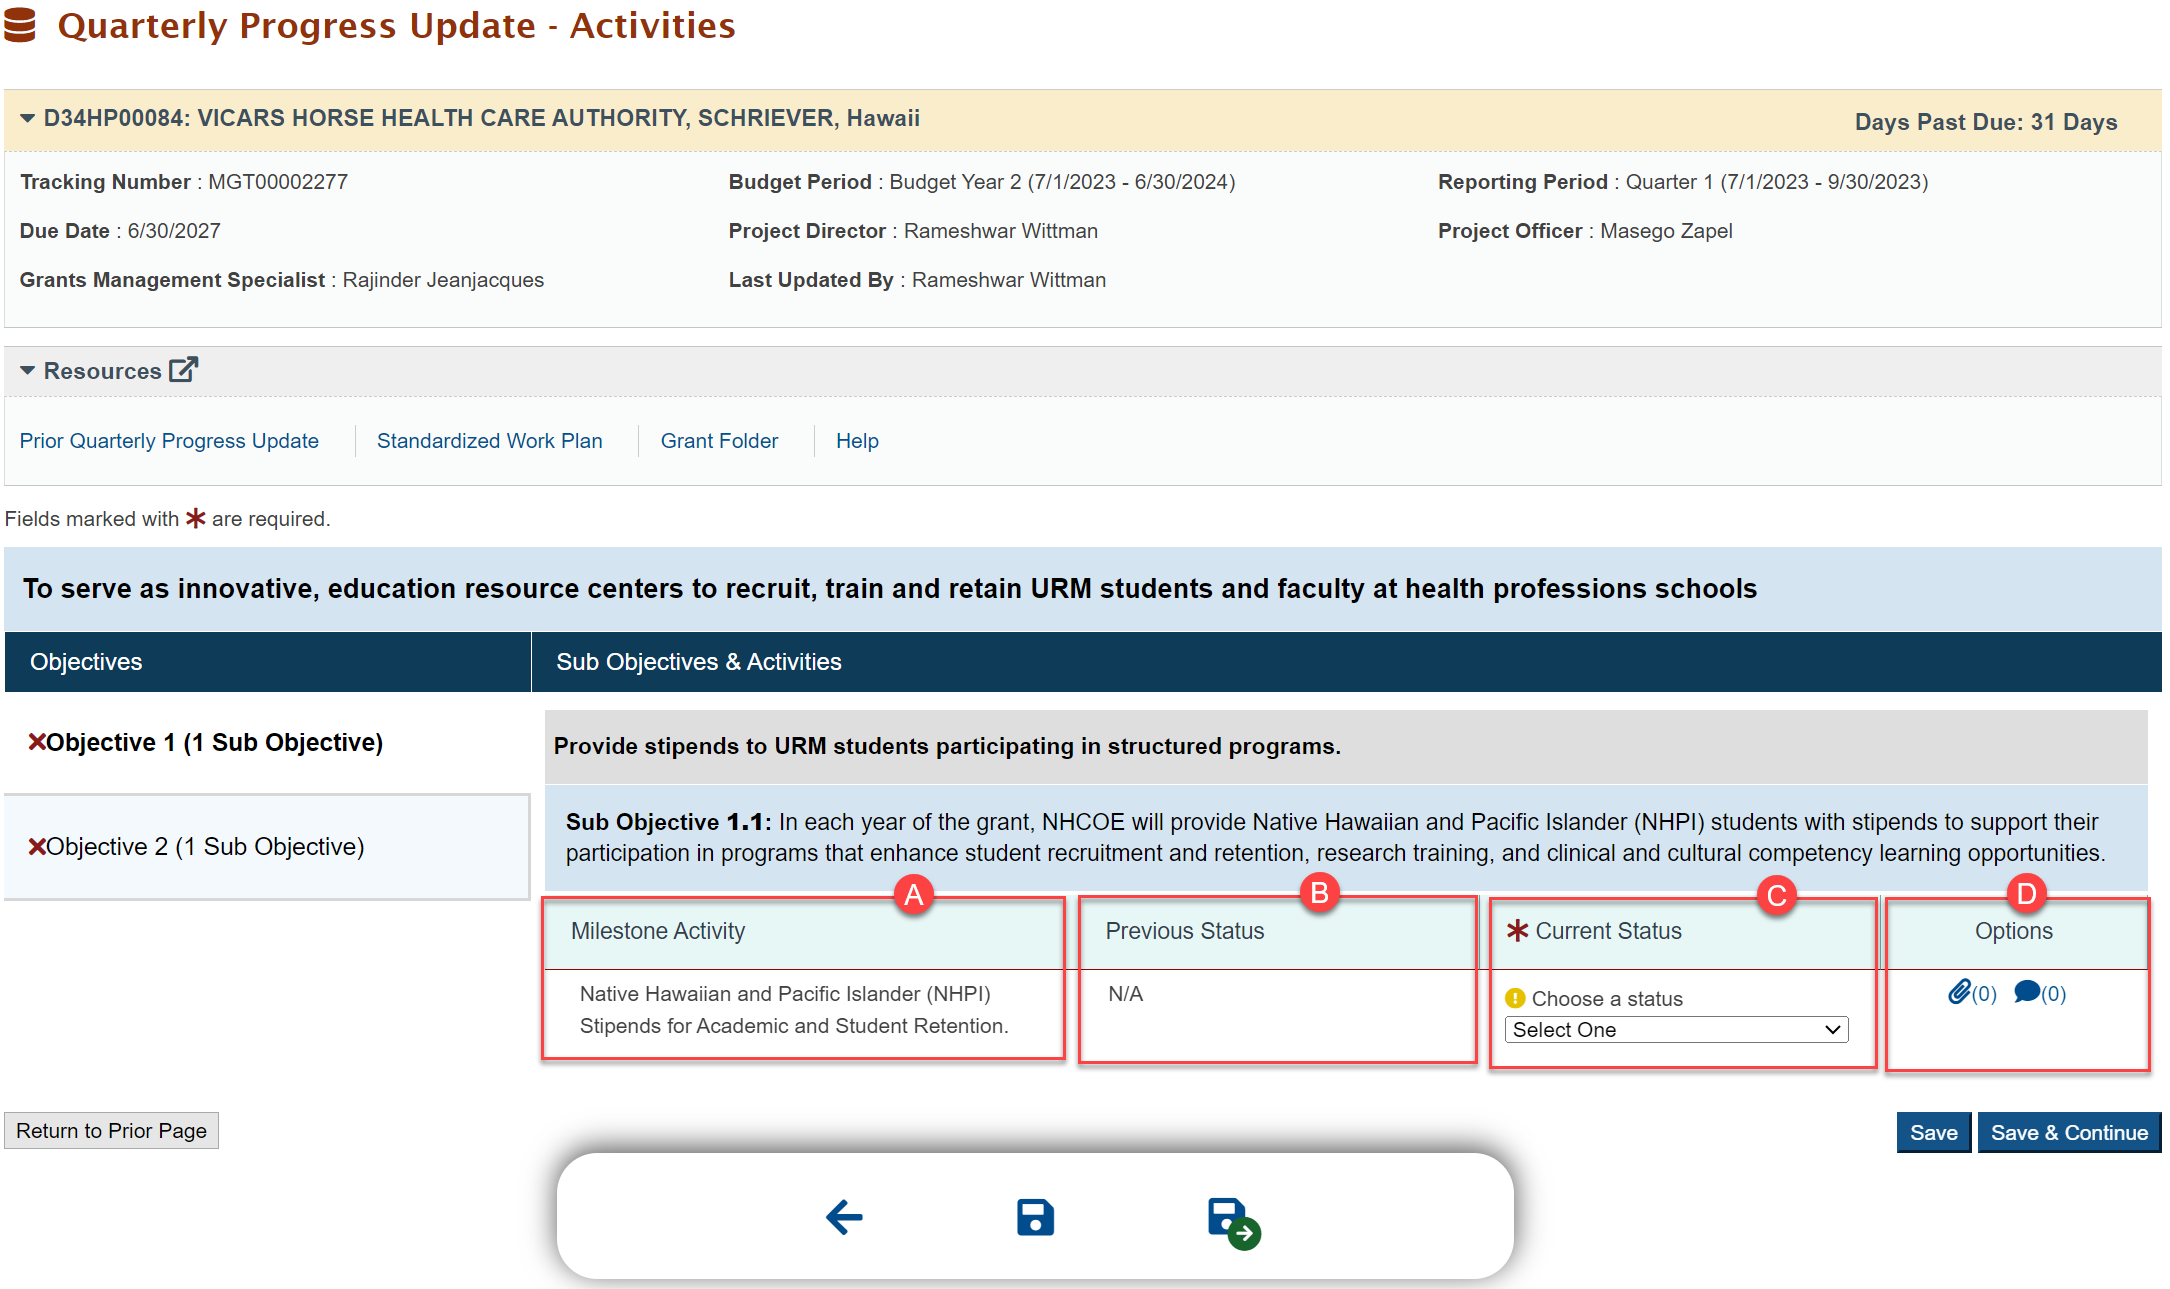 Screenshot of Activities Page Bottom Overview